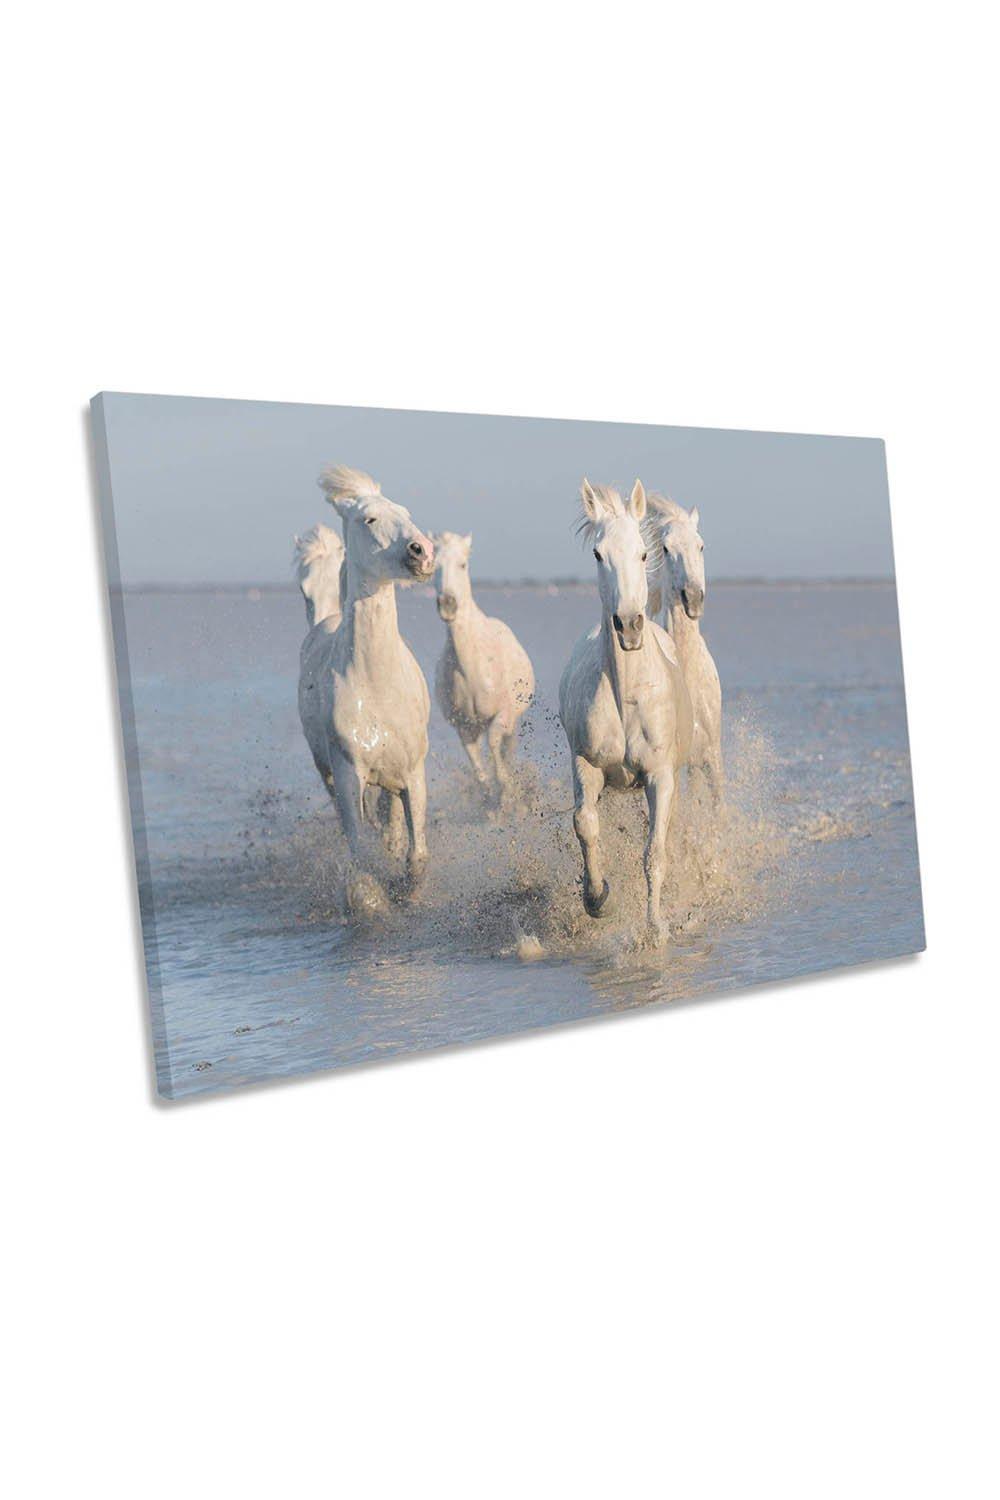 White Horse Running Beach Canvas Wall Art Picture Print